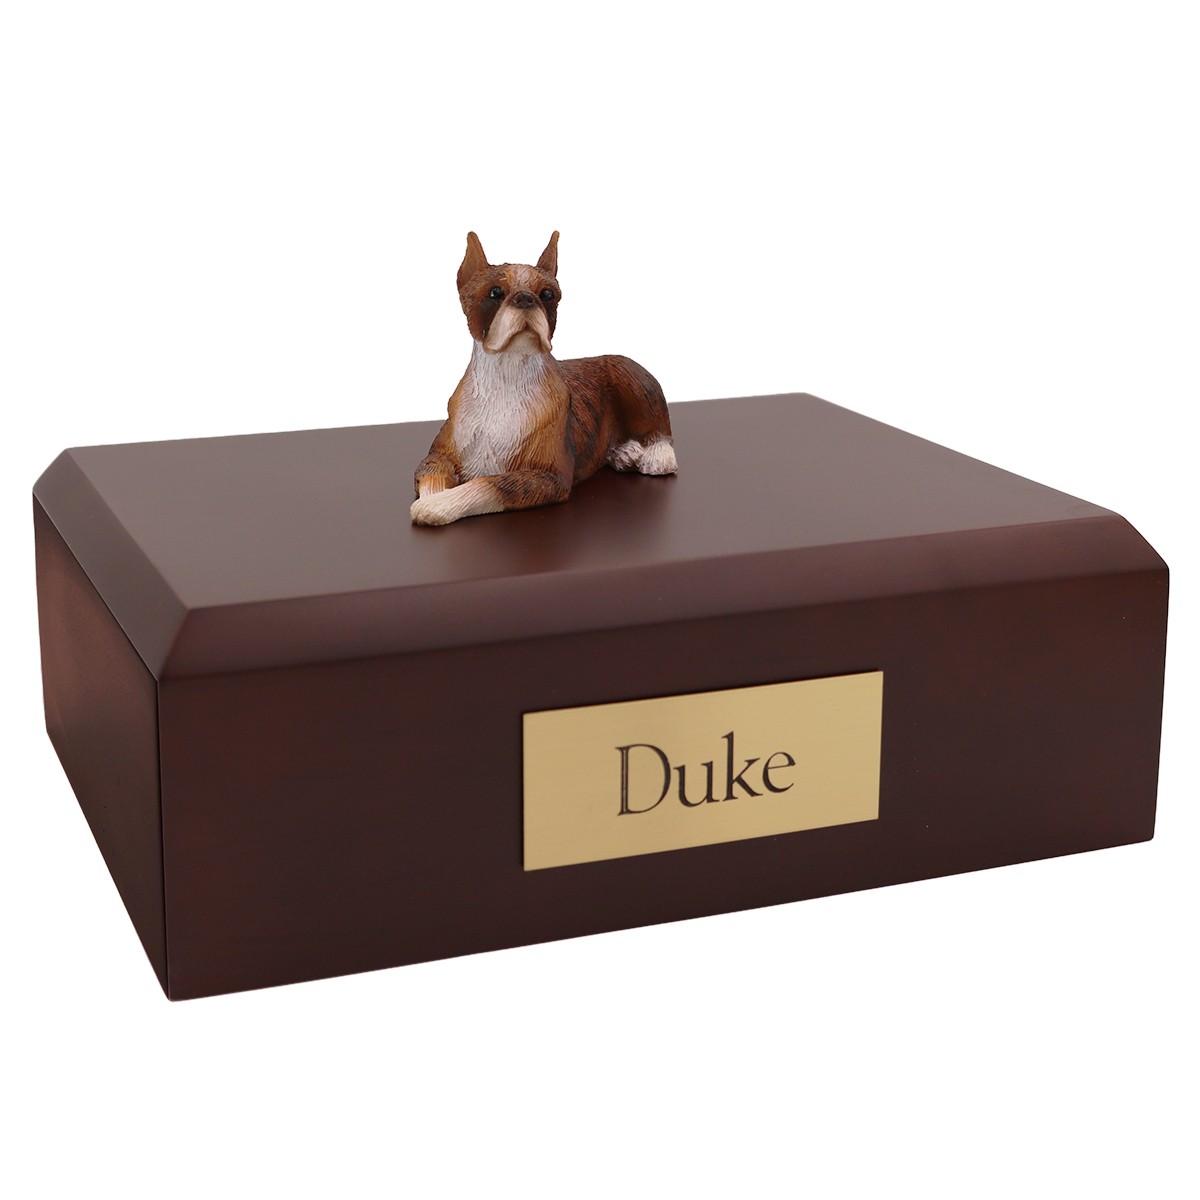 Dog, Boxer, Brindle - ears up - Figurine Urn